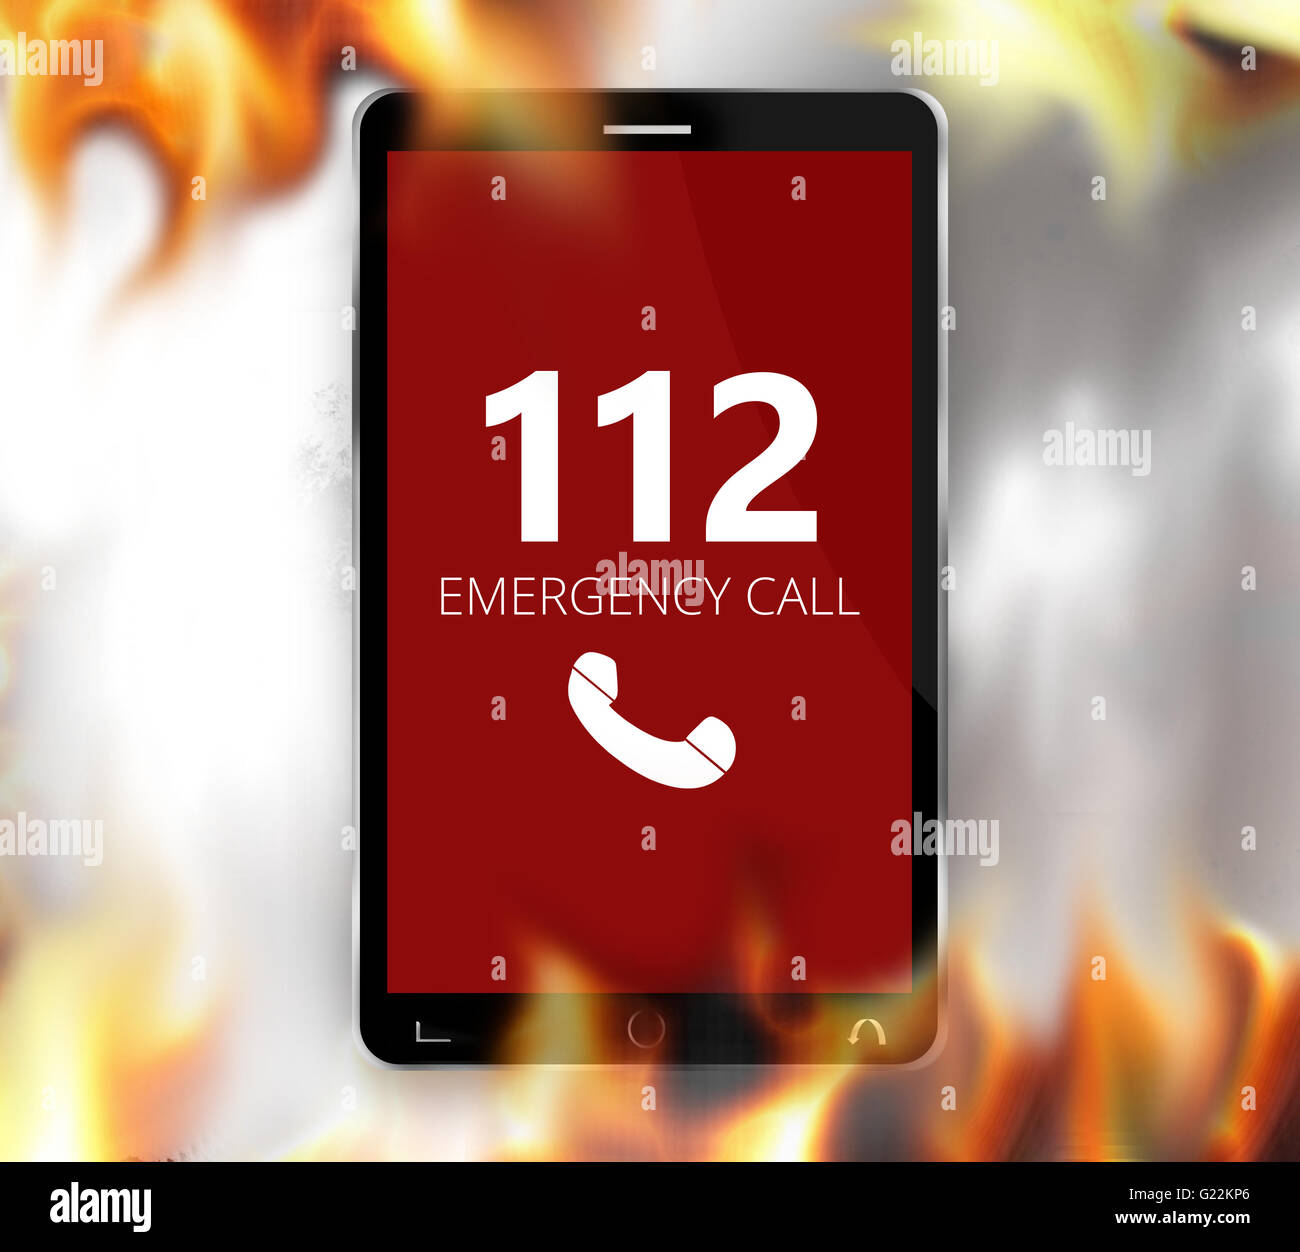 emergency call 112 Stock Photo